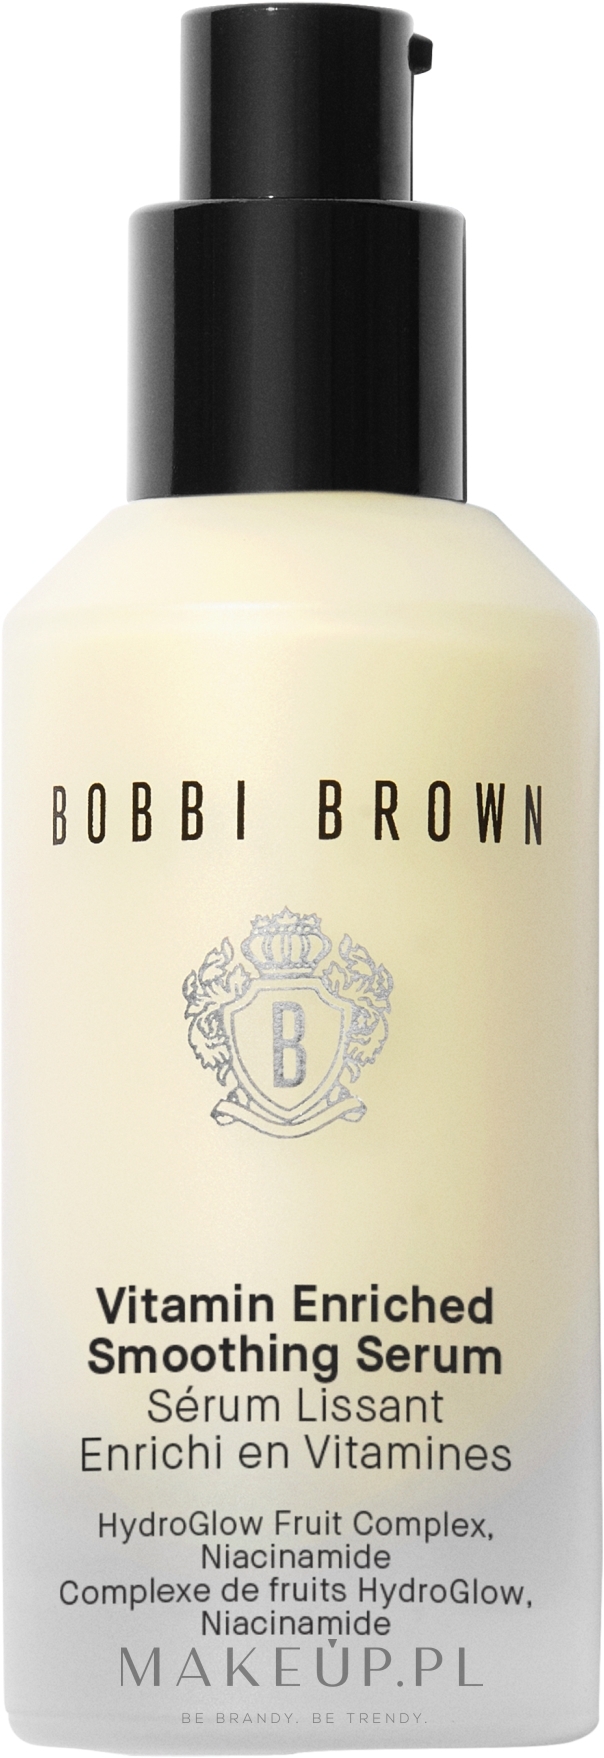 Serum do twarzy - Bobbi Brown Vitamin Enriched Smoothing Serum  — Zdjęcie 30 ml